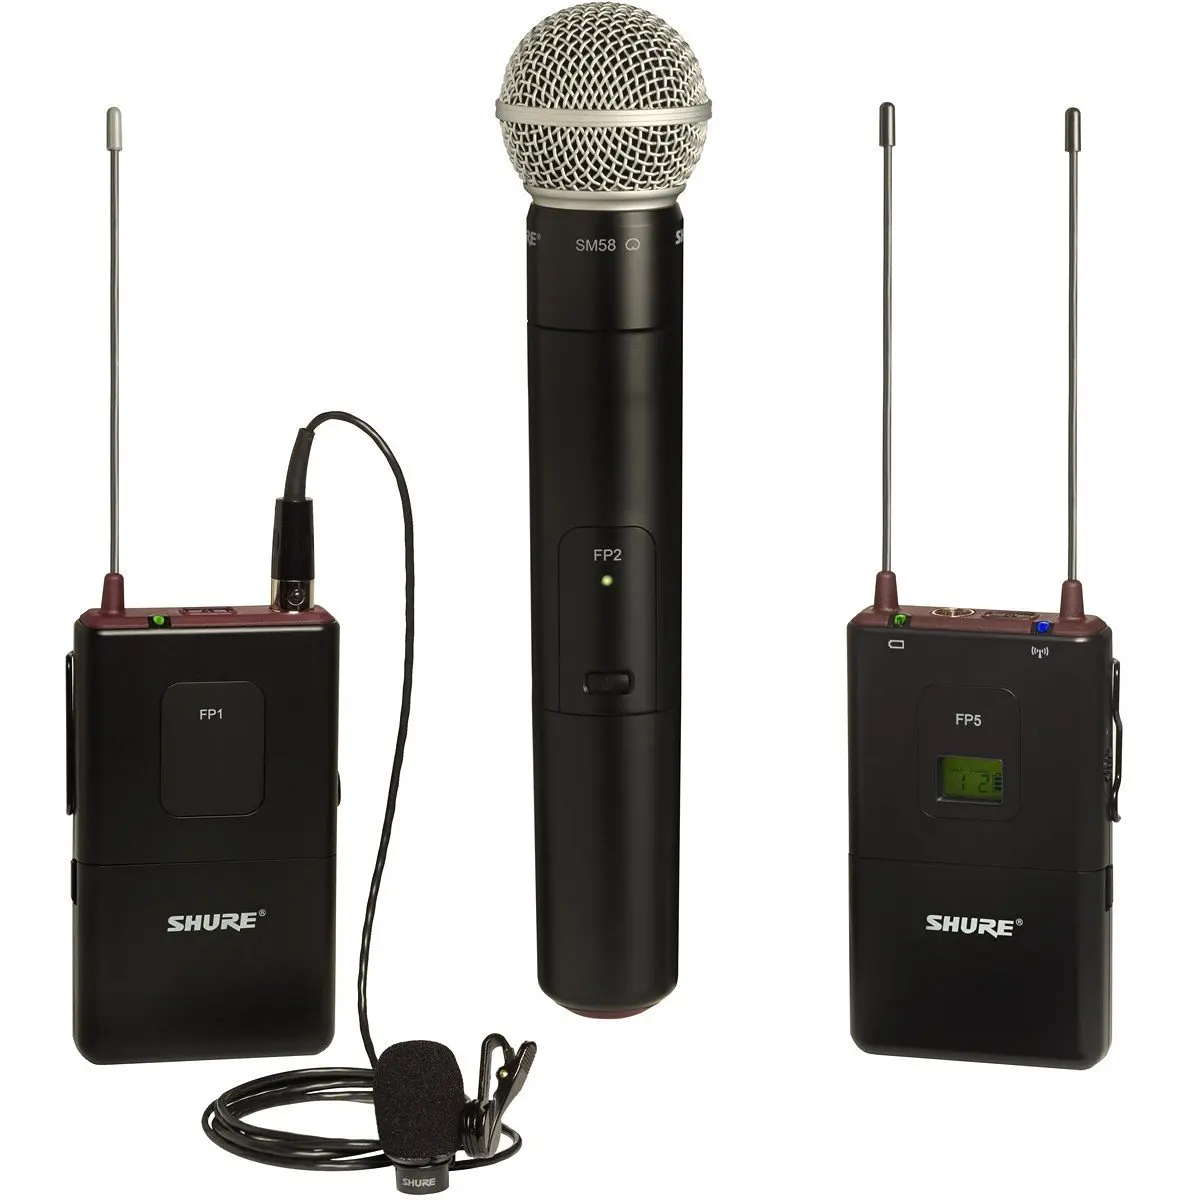 Cheap shure microphones